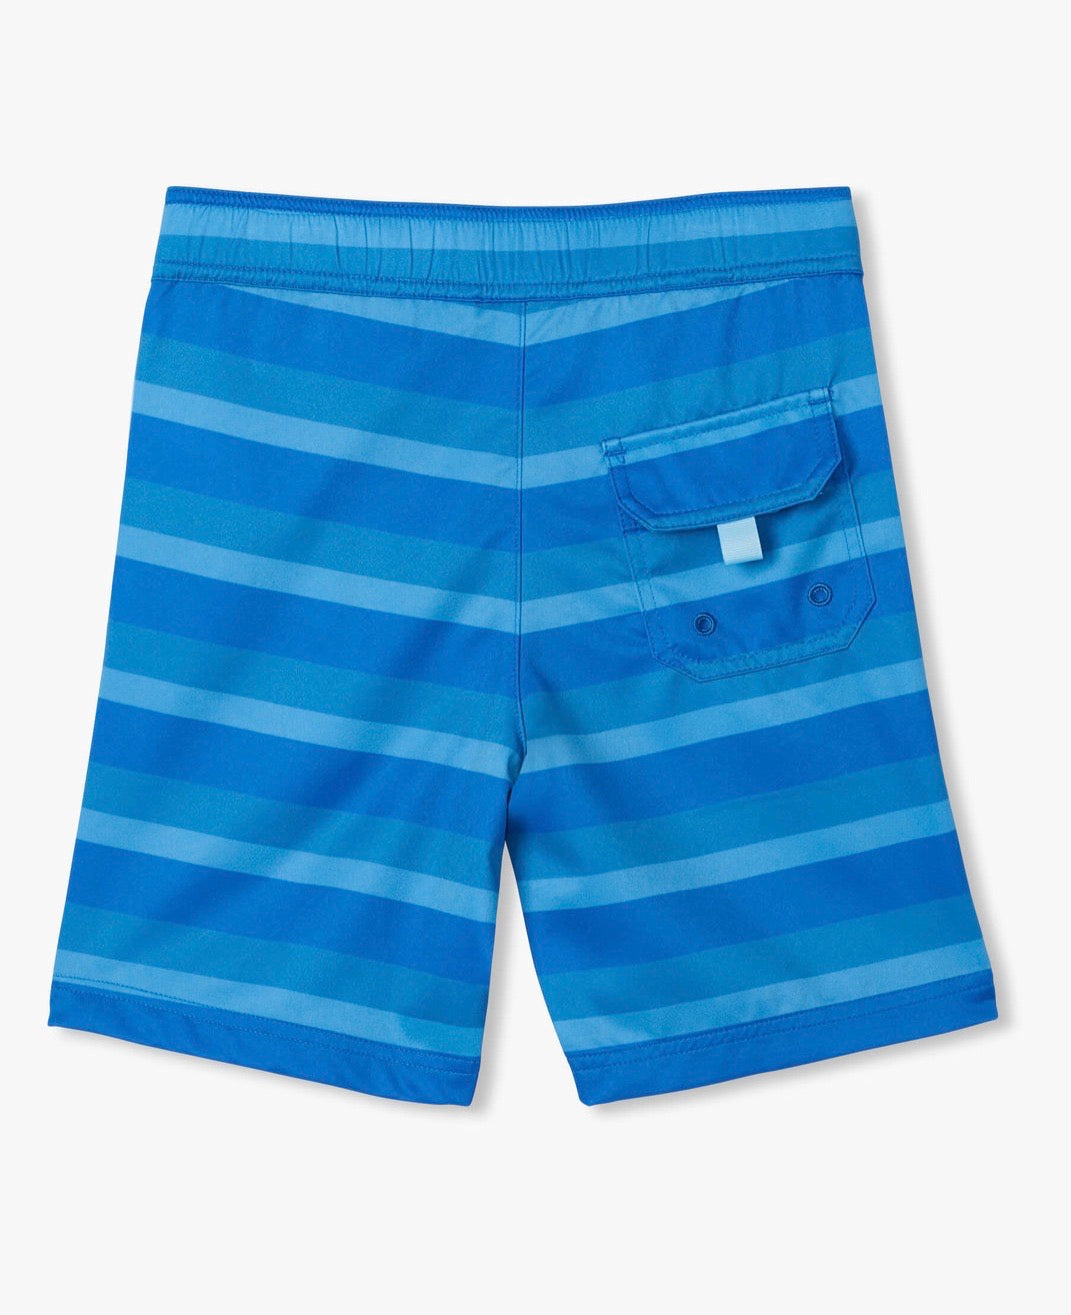 Blue stripe quick dry shorts